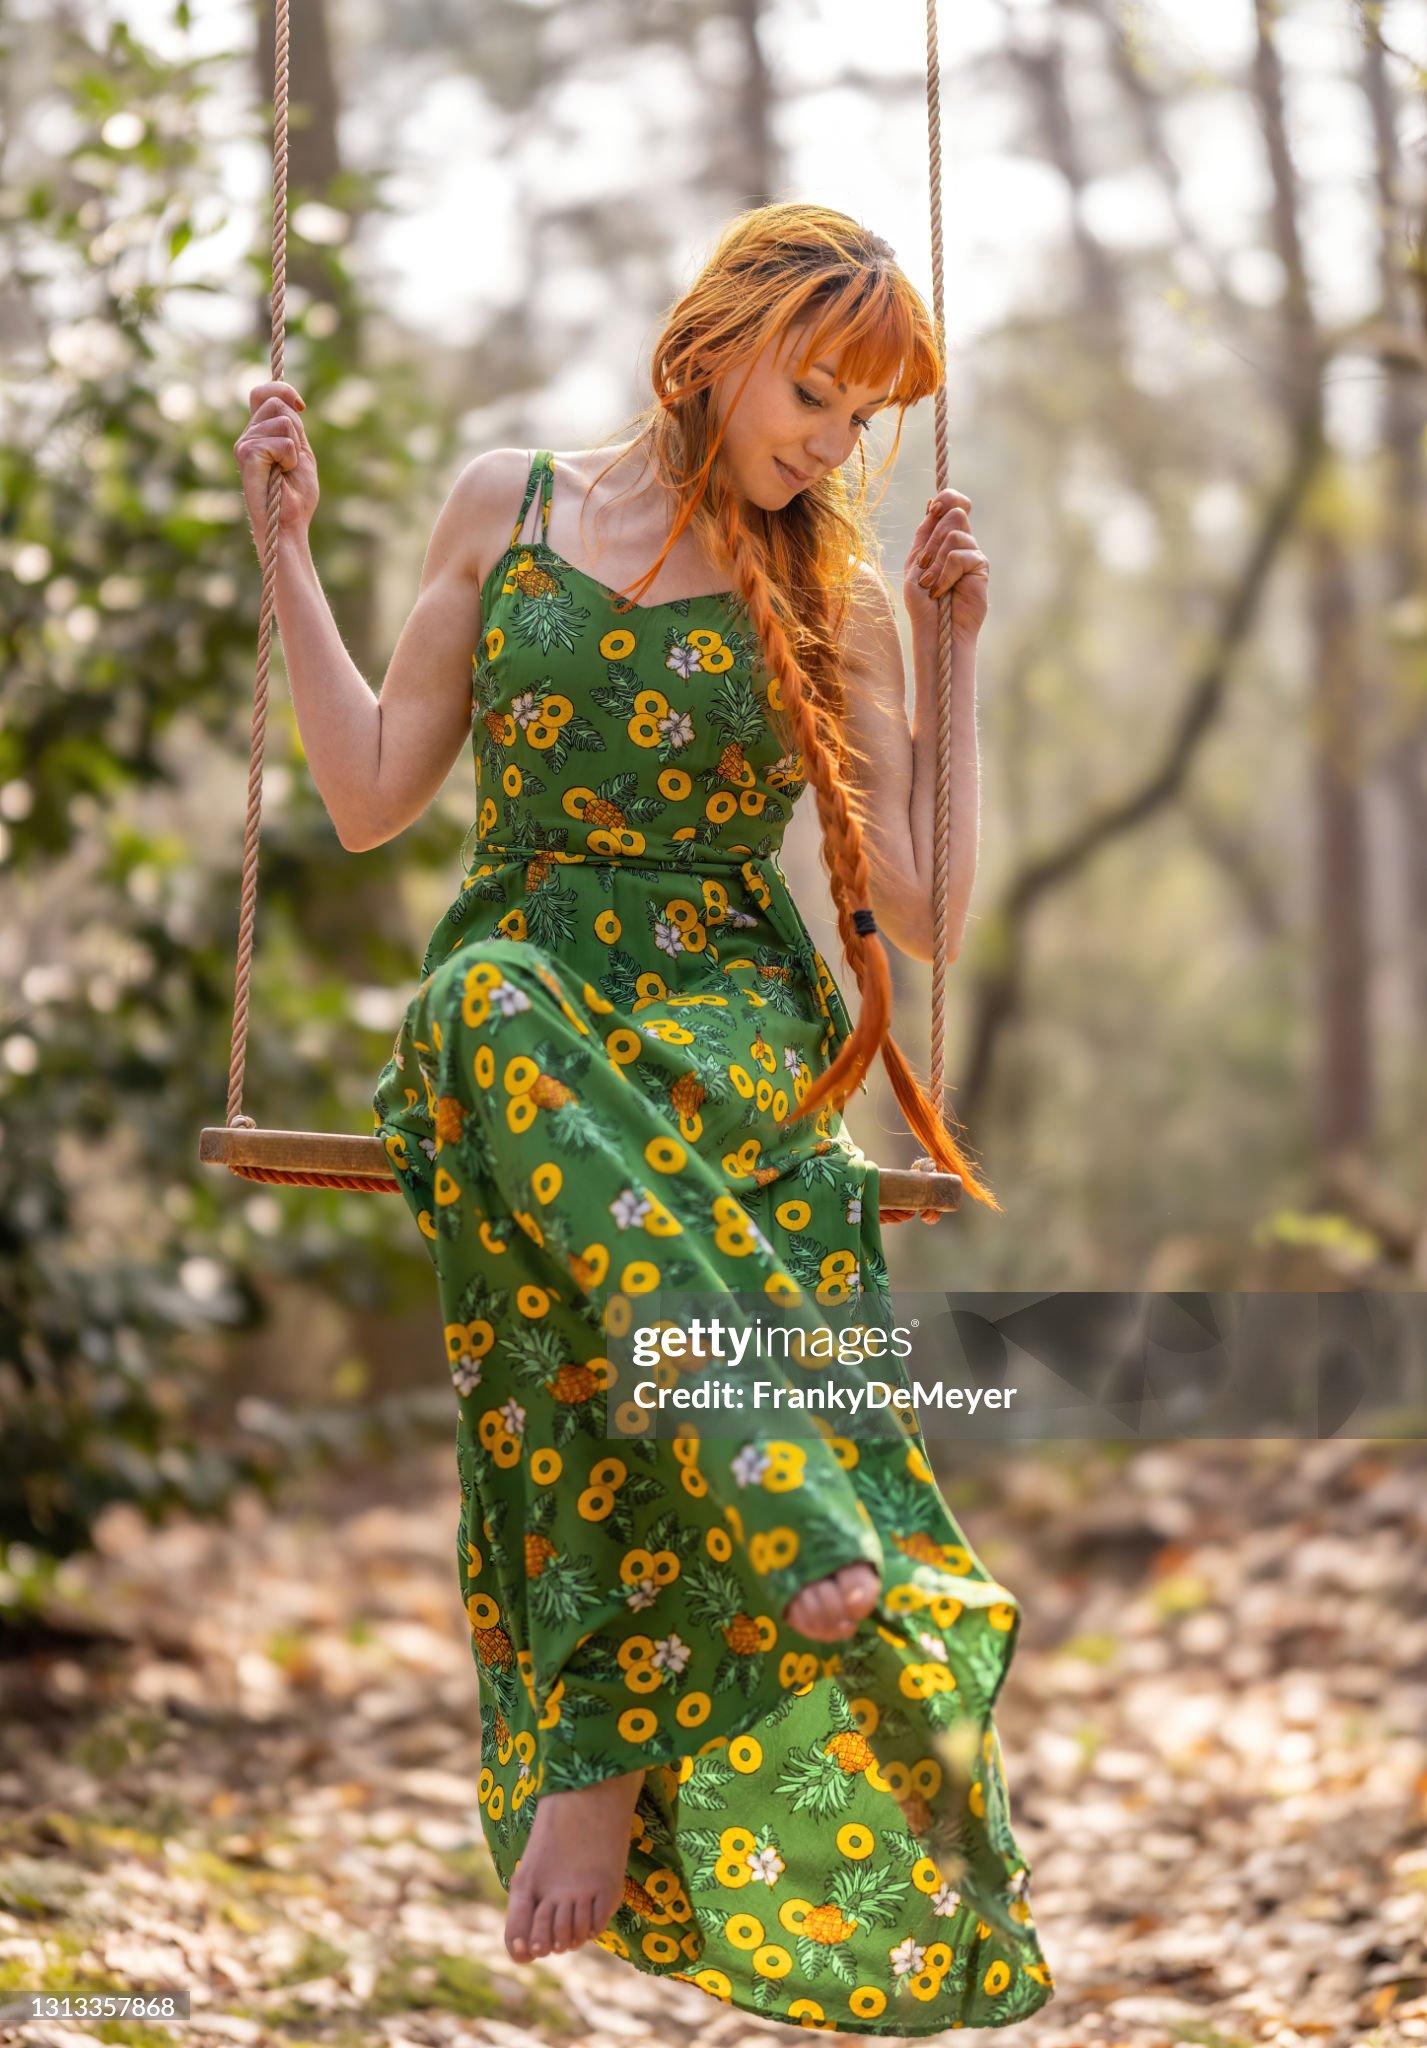 https://media.gettyimages.com/id/1313357868/photo/bashful-beautiful-young-woman-in-the-public-parc-woods-swinging-on-a-rope-swing-wearing-a.jpg?s=2048x2048&amp;w=gi&amp;k=20&amp;c=tF3qPrsJ3fK7dNJWVwB-QFWg6OCYuA3Kk4RTj8IwRro=